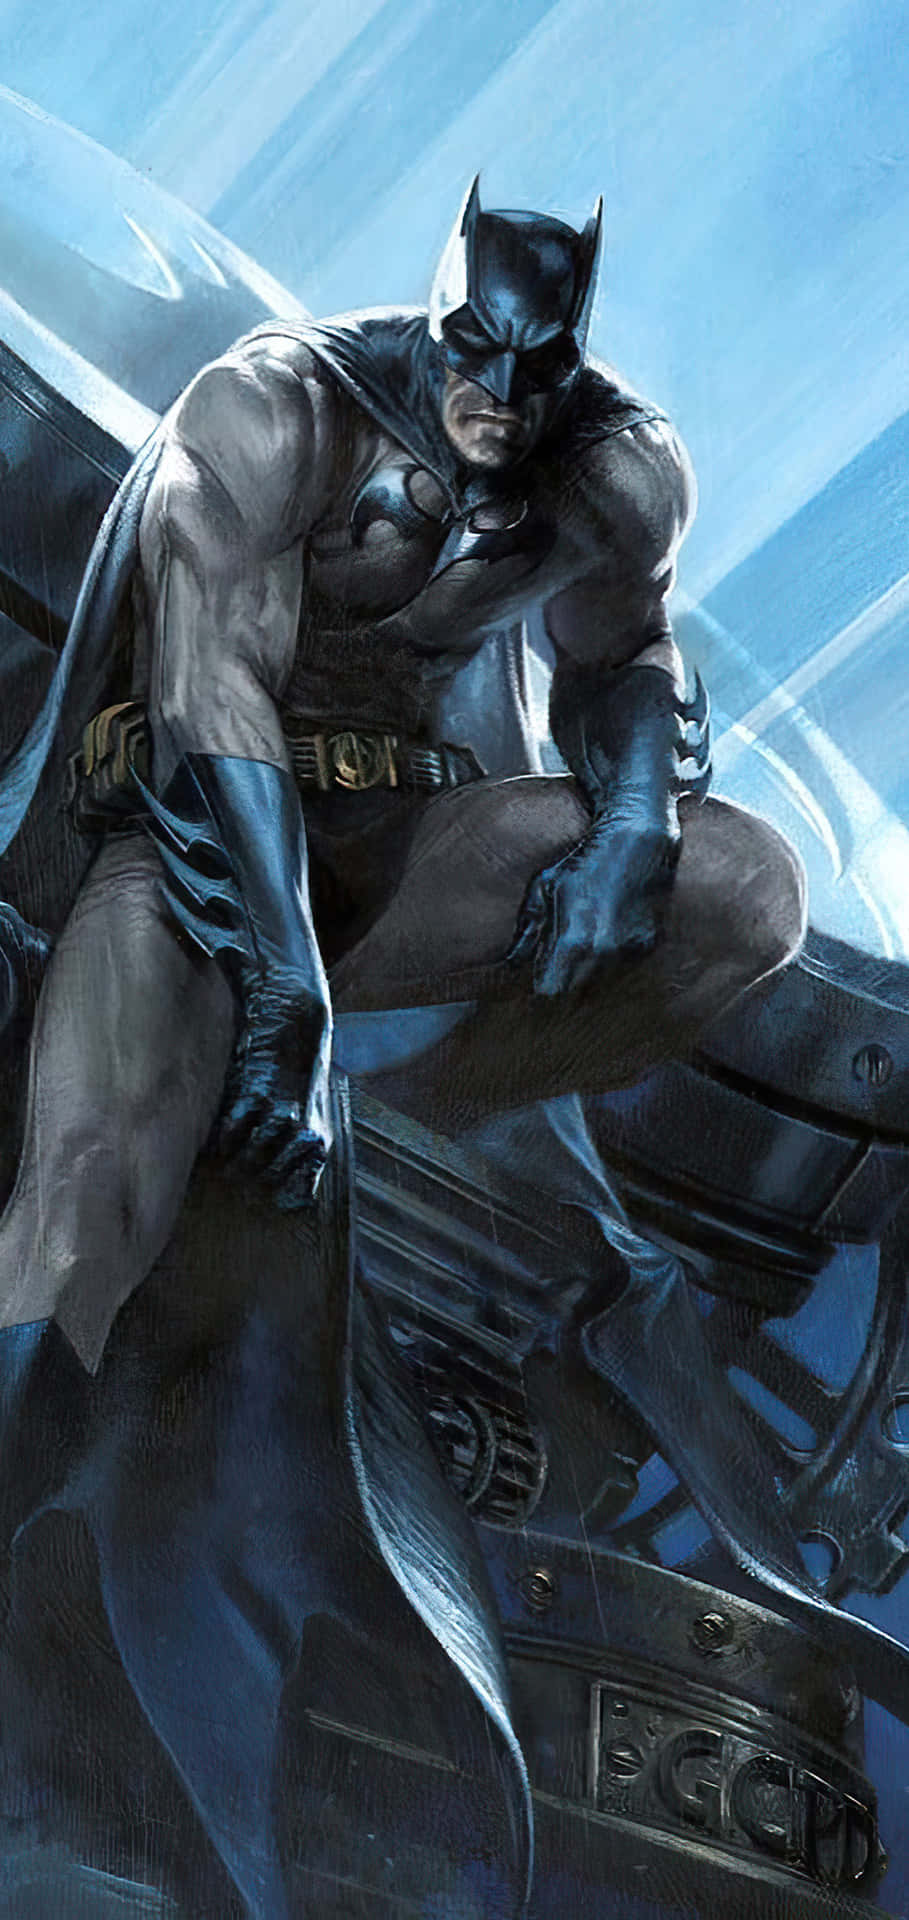 "The hero we need: Awesome Batman" Wallpaper